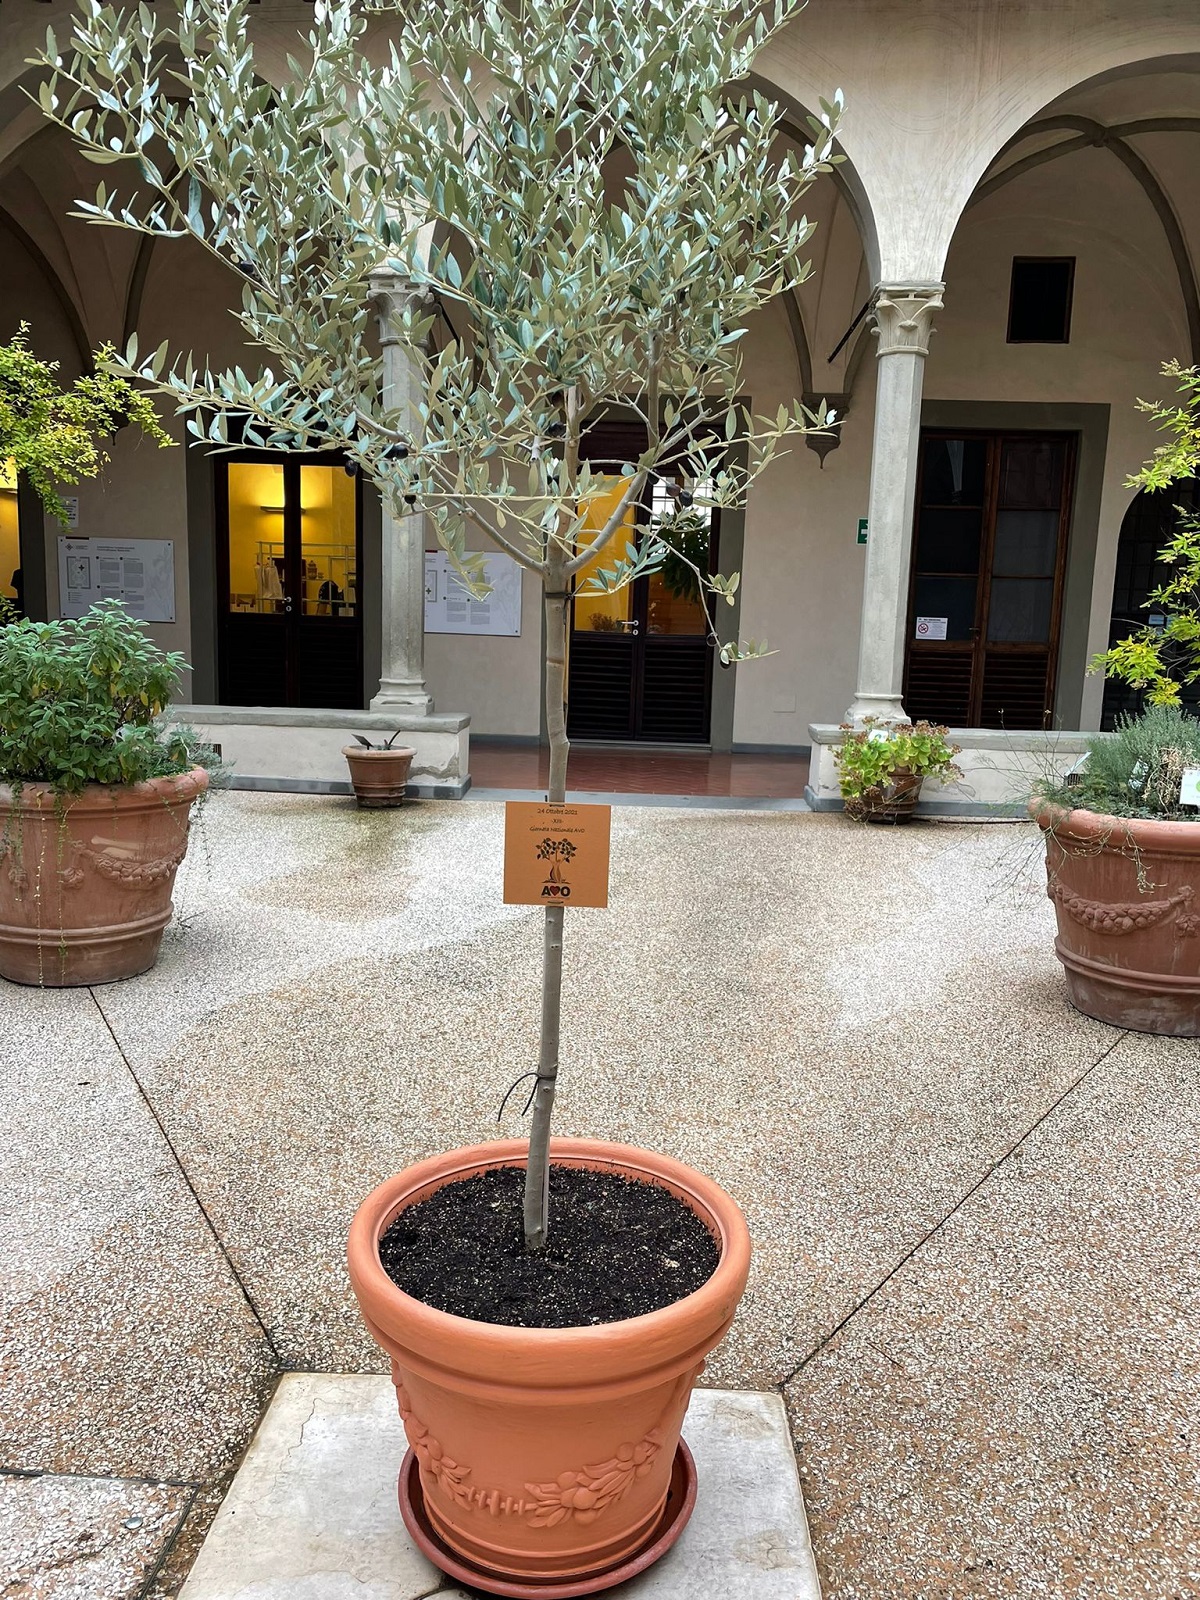 La pianta di olivo donata (Fonte foto Ausl Toscana Informa)